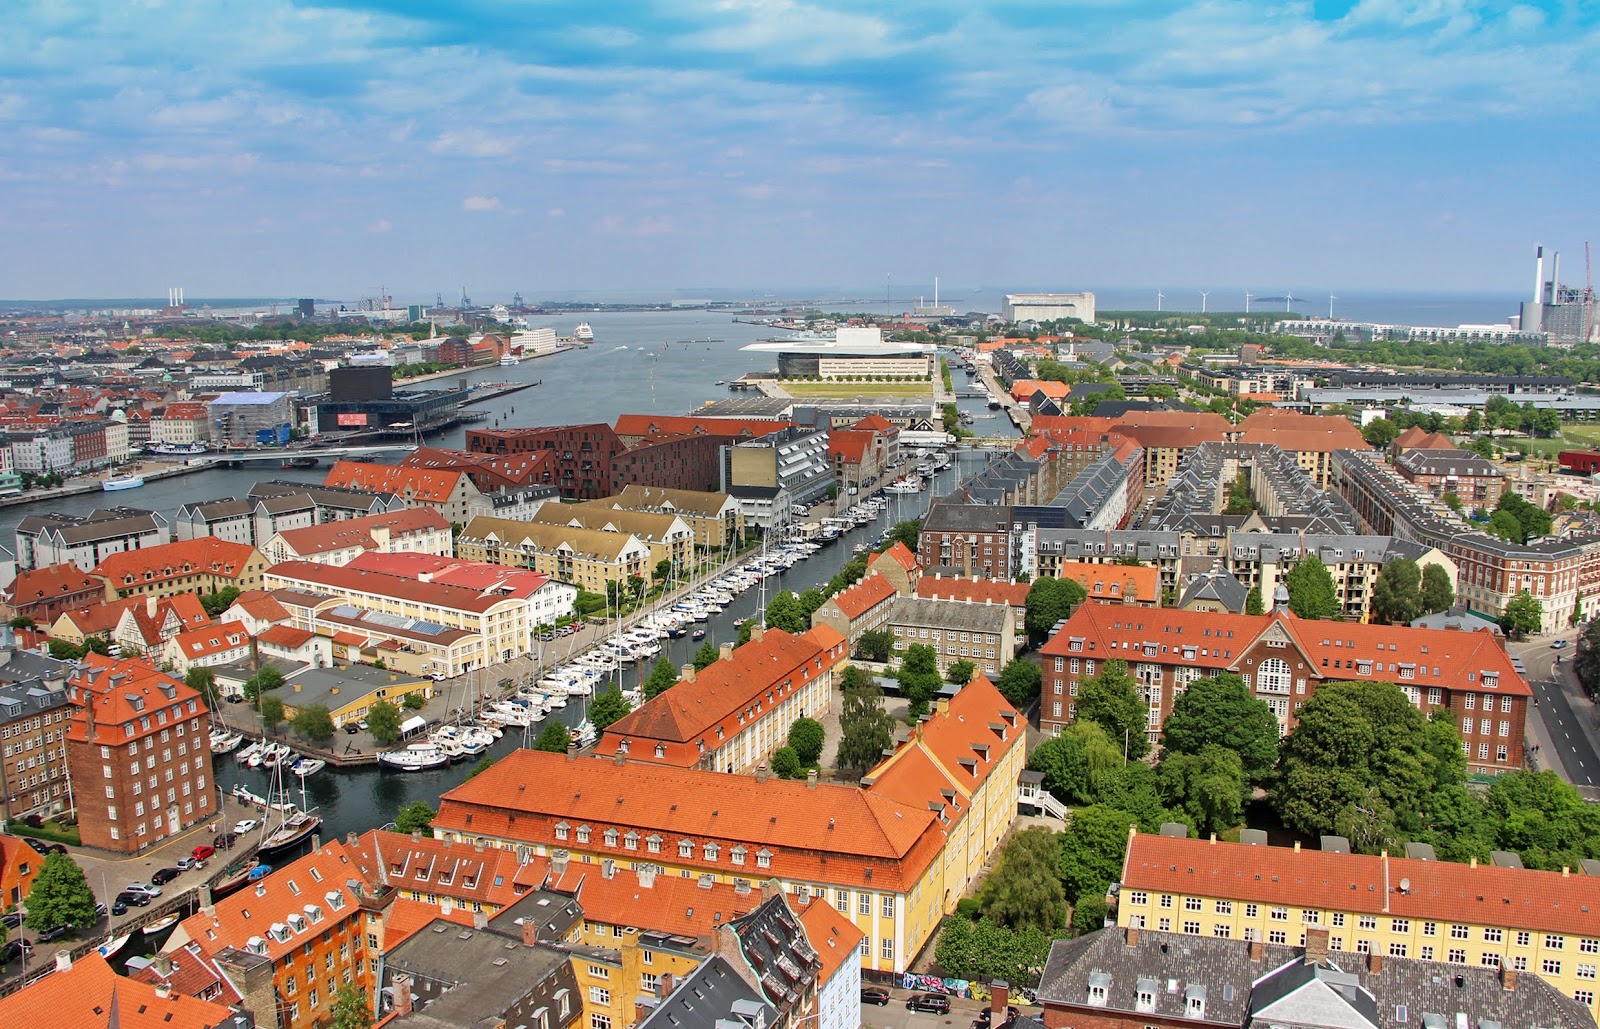 AM Dolce Vita: Our Nordic Trip: Copenhagen in 4 Days